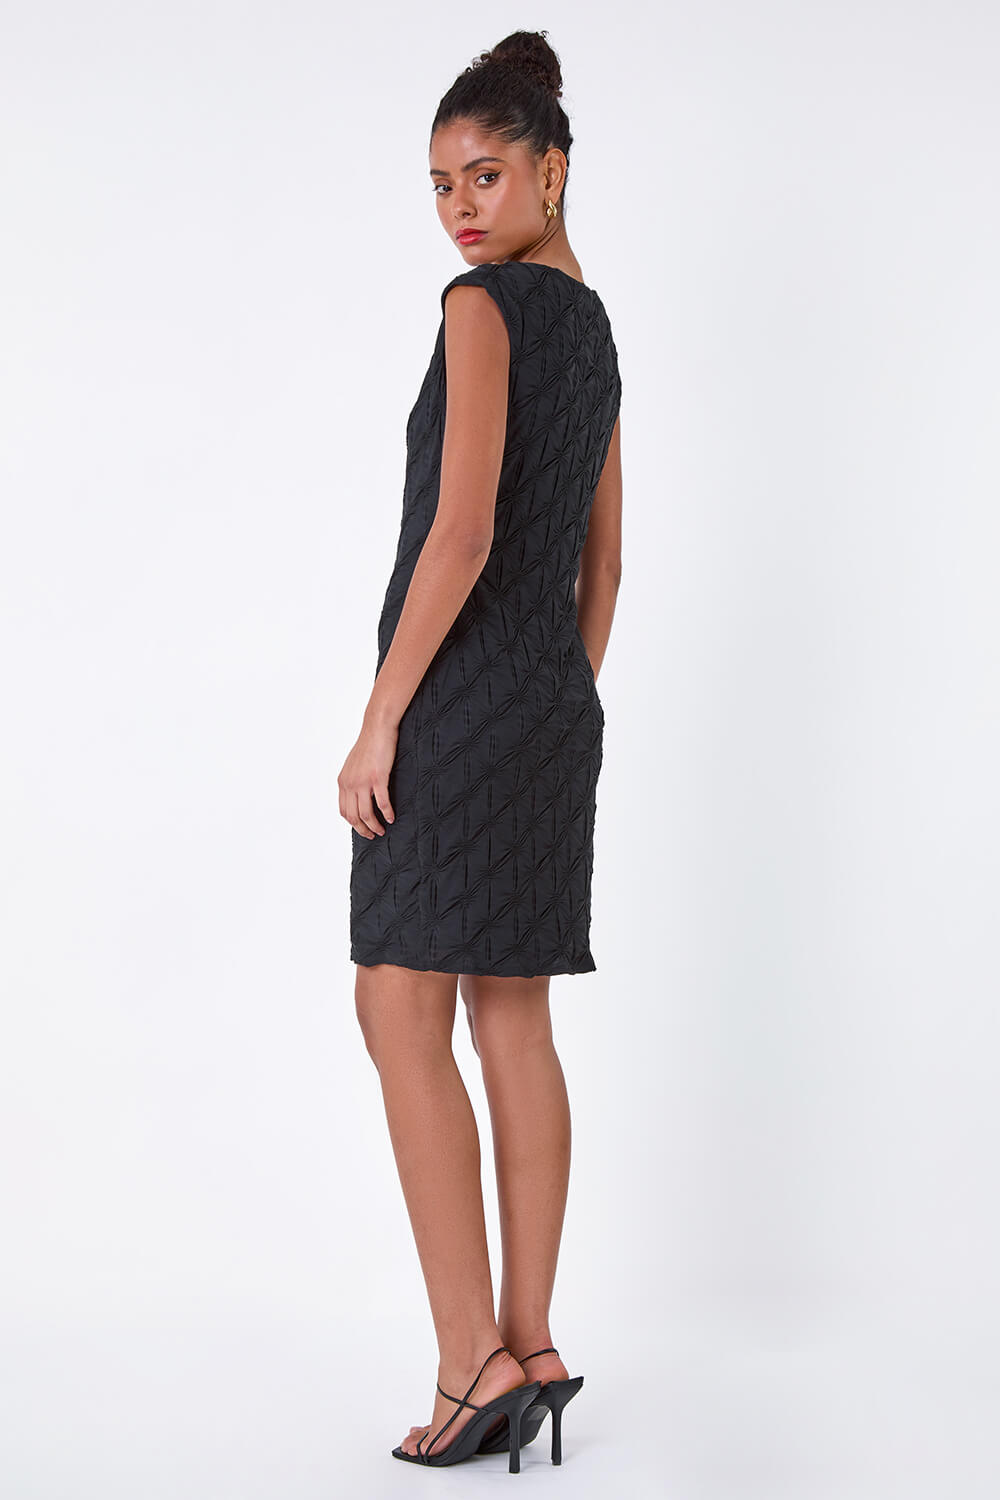 Black Textured Stretch Cap Sleeve Dress, Image 3 of 5